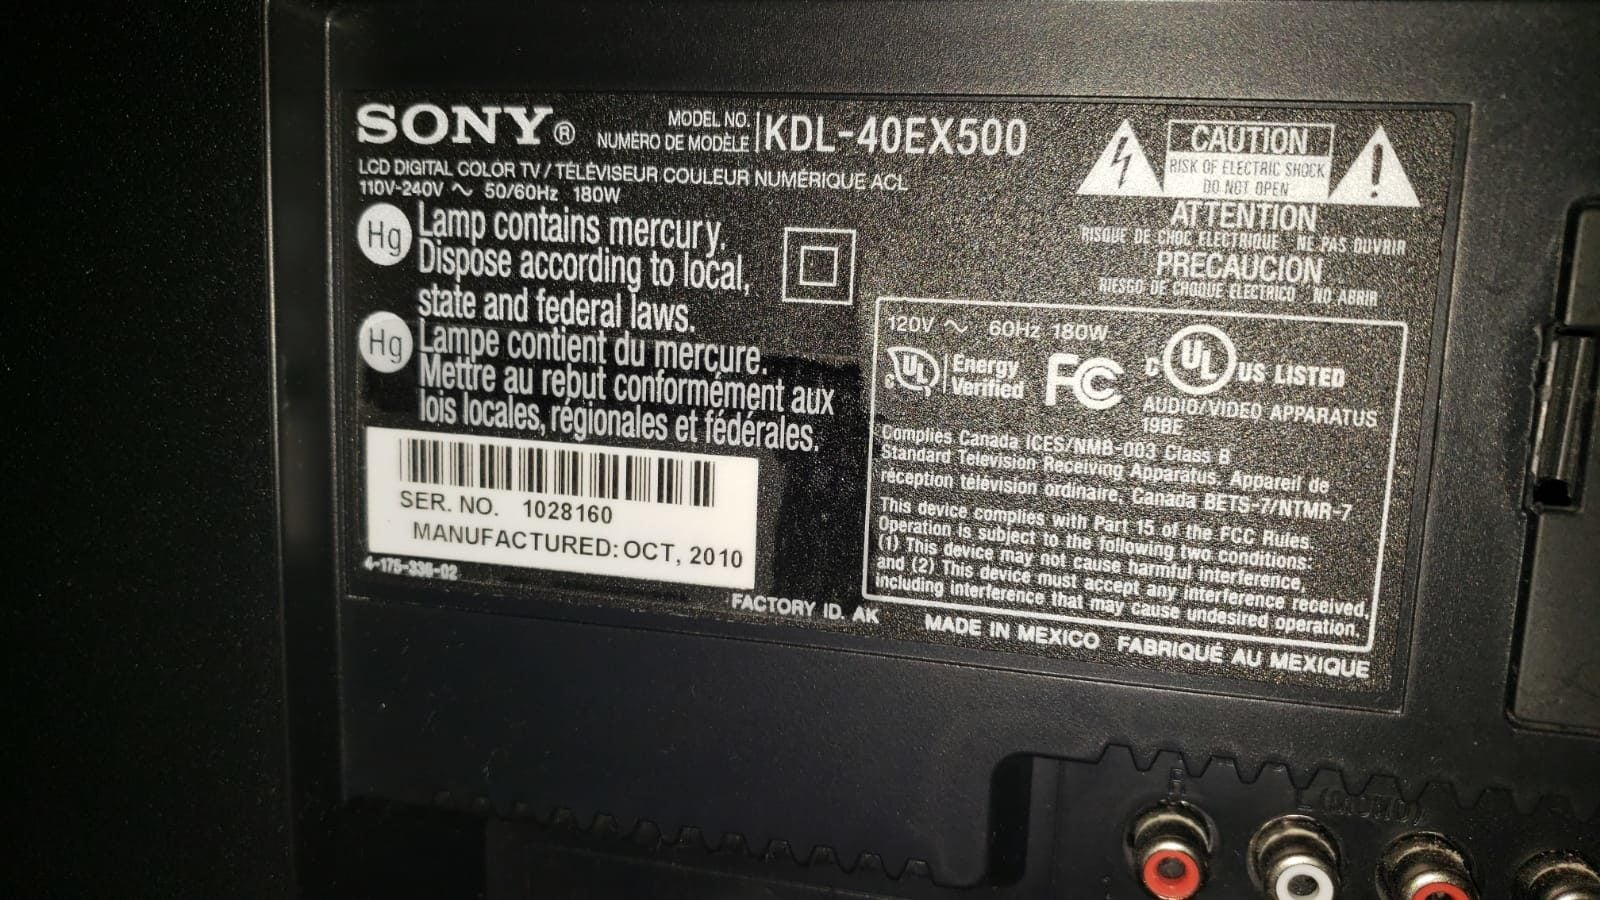 Need TV sound amplify - Sony Bravia, KDL-40EX500? - RedFlagDeals